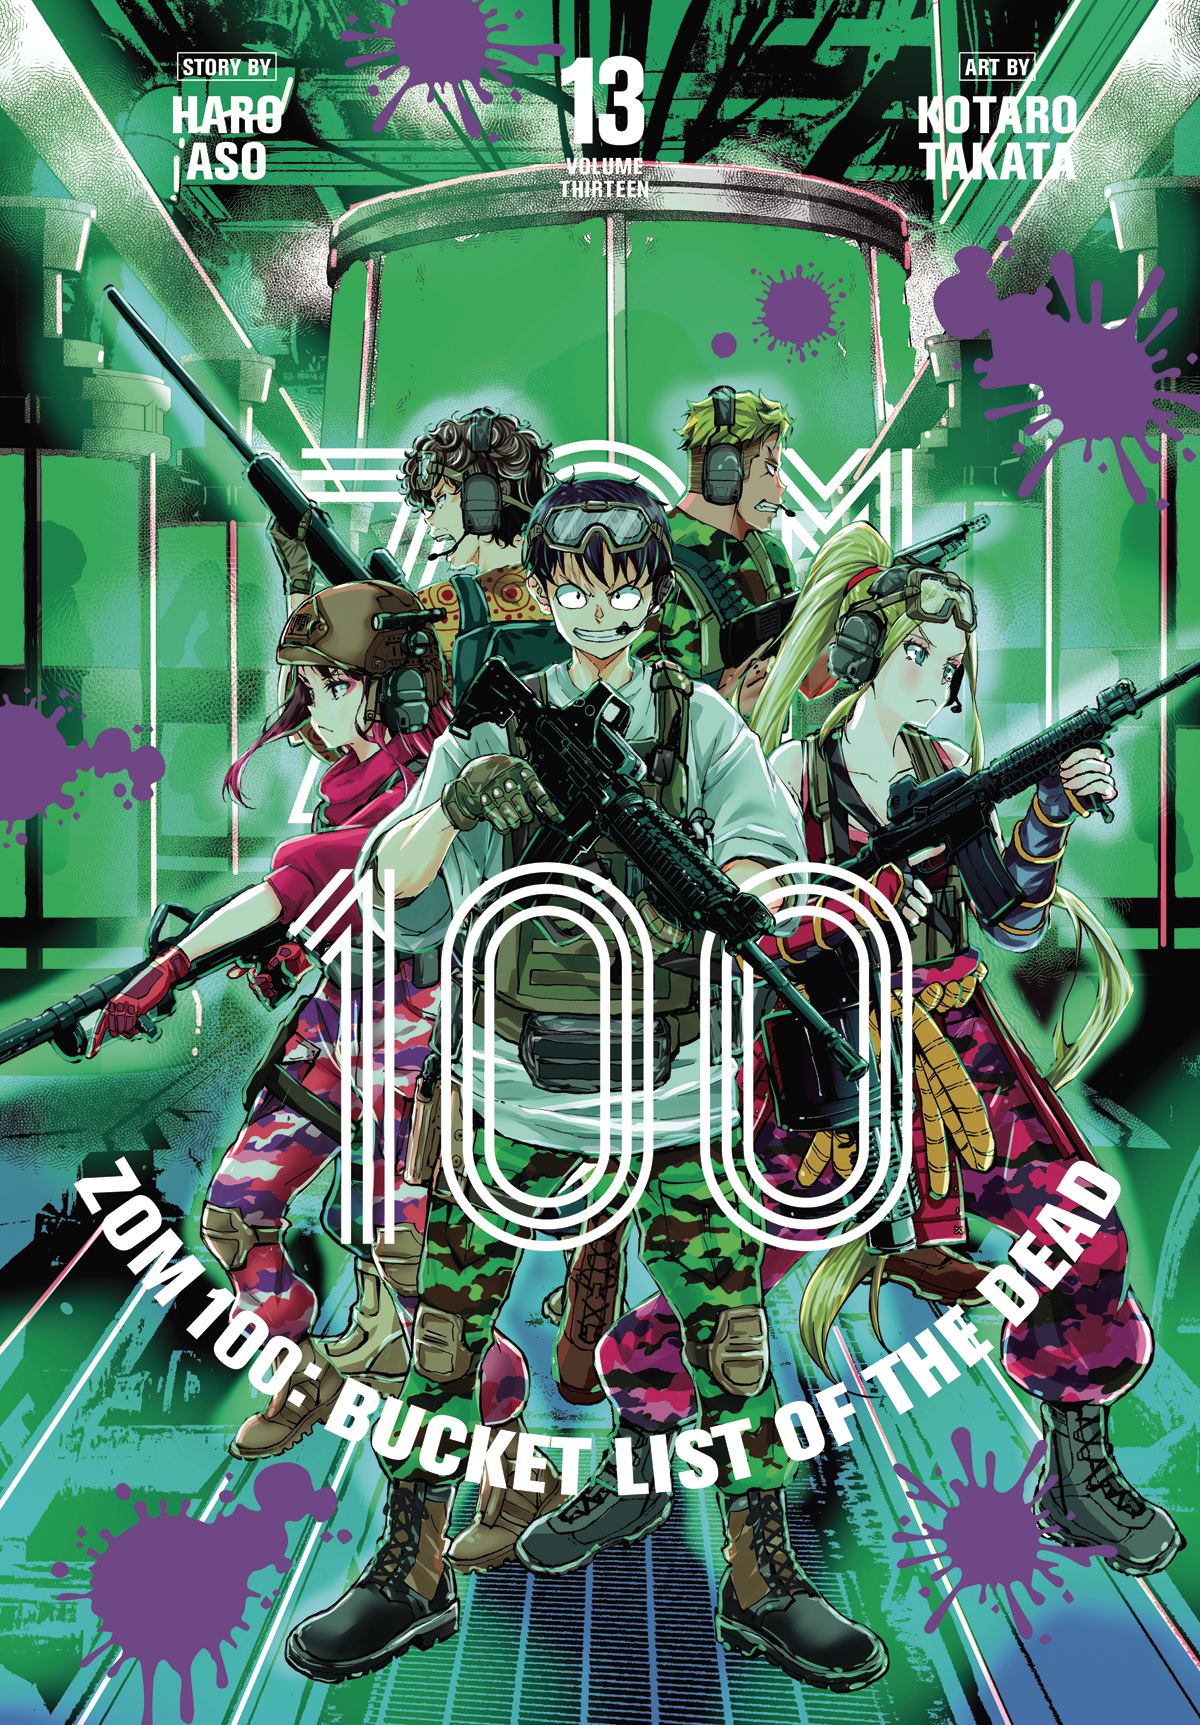 Zom 100 Bucket List of the Dead Manga 100 Bucketlist of Dead Graphic Novel Volume 13